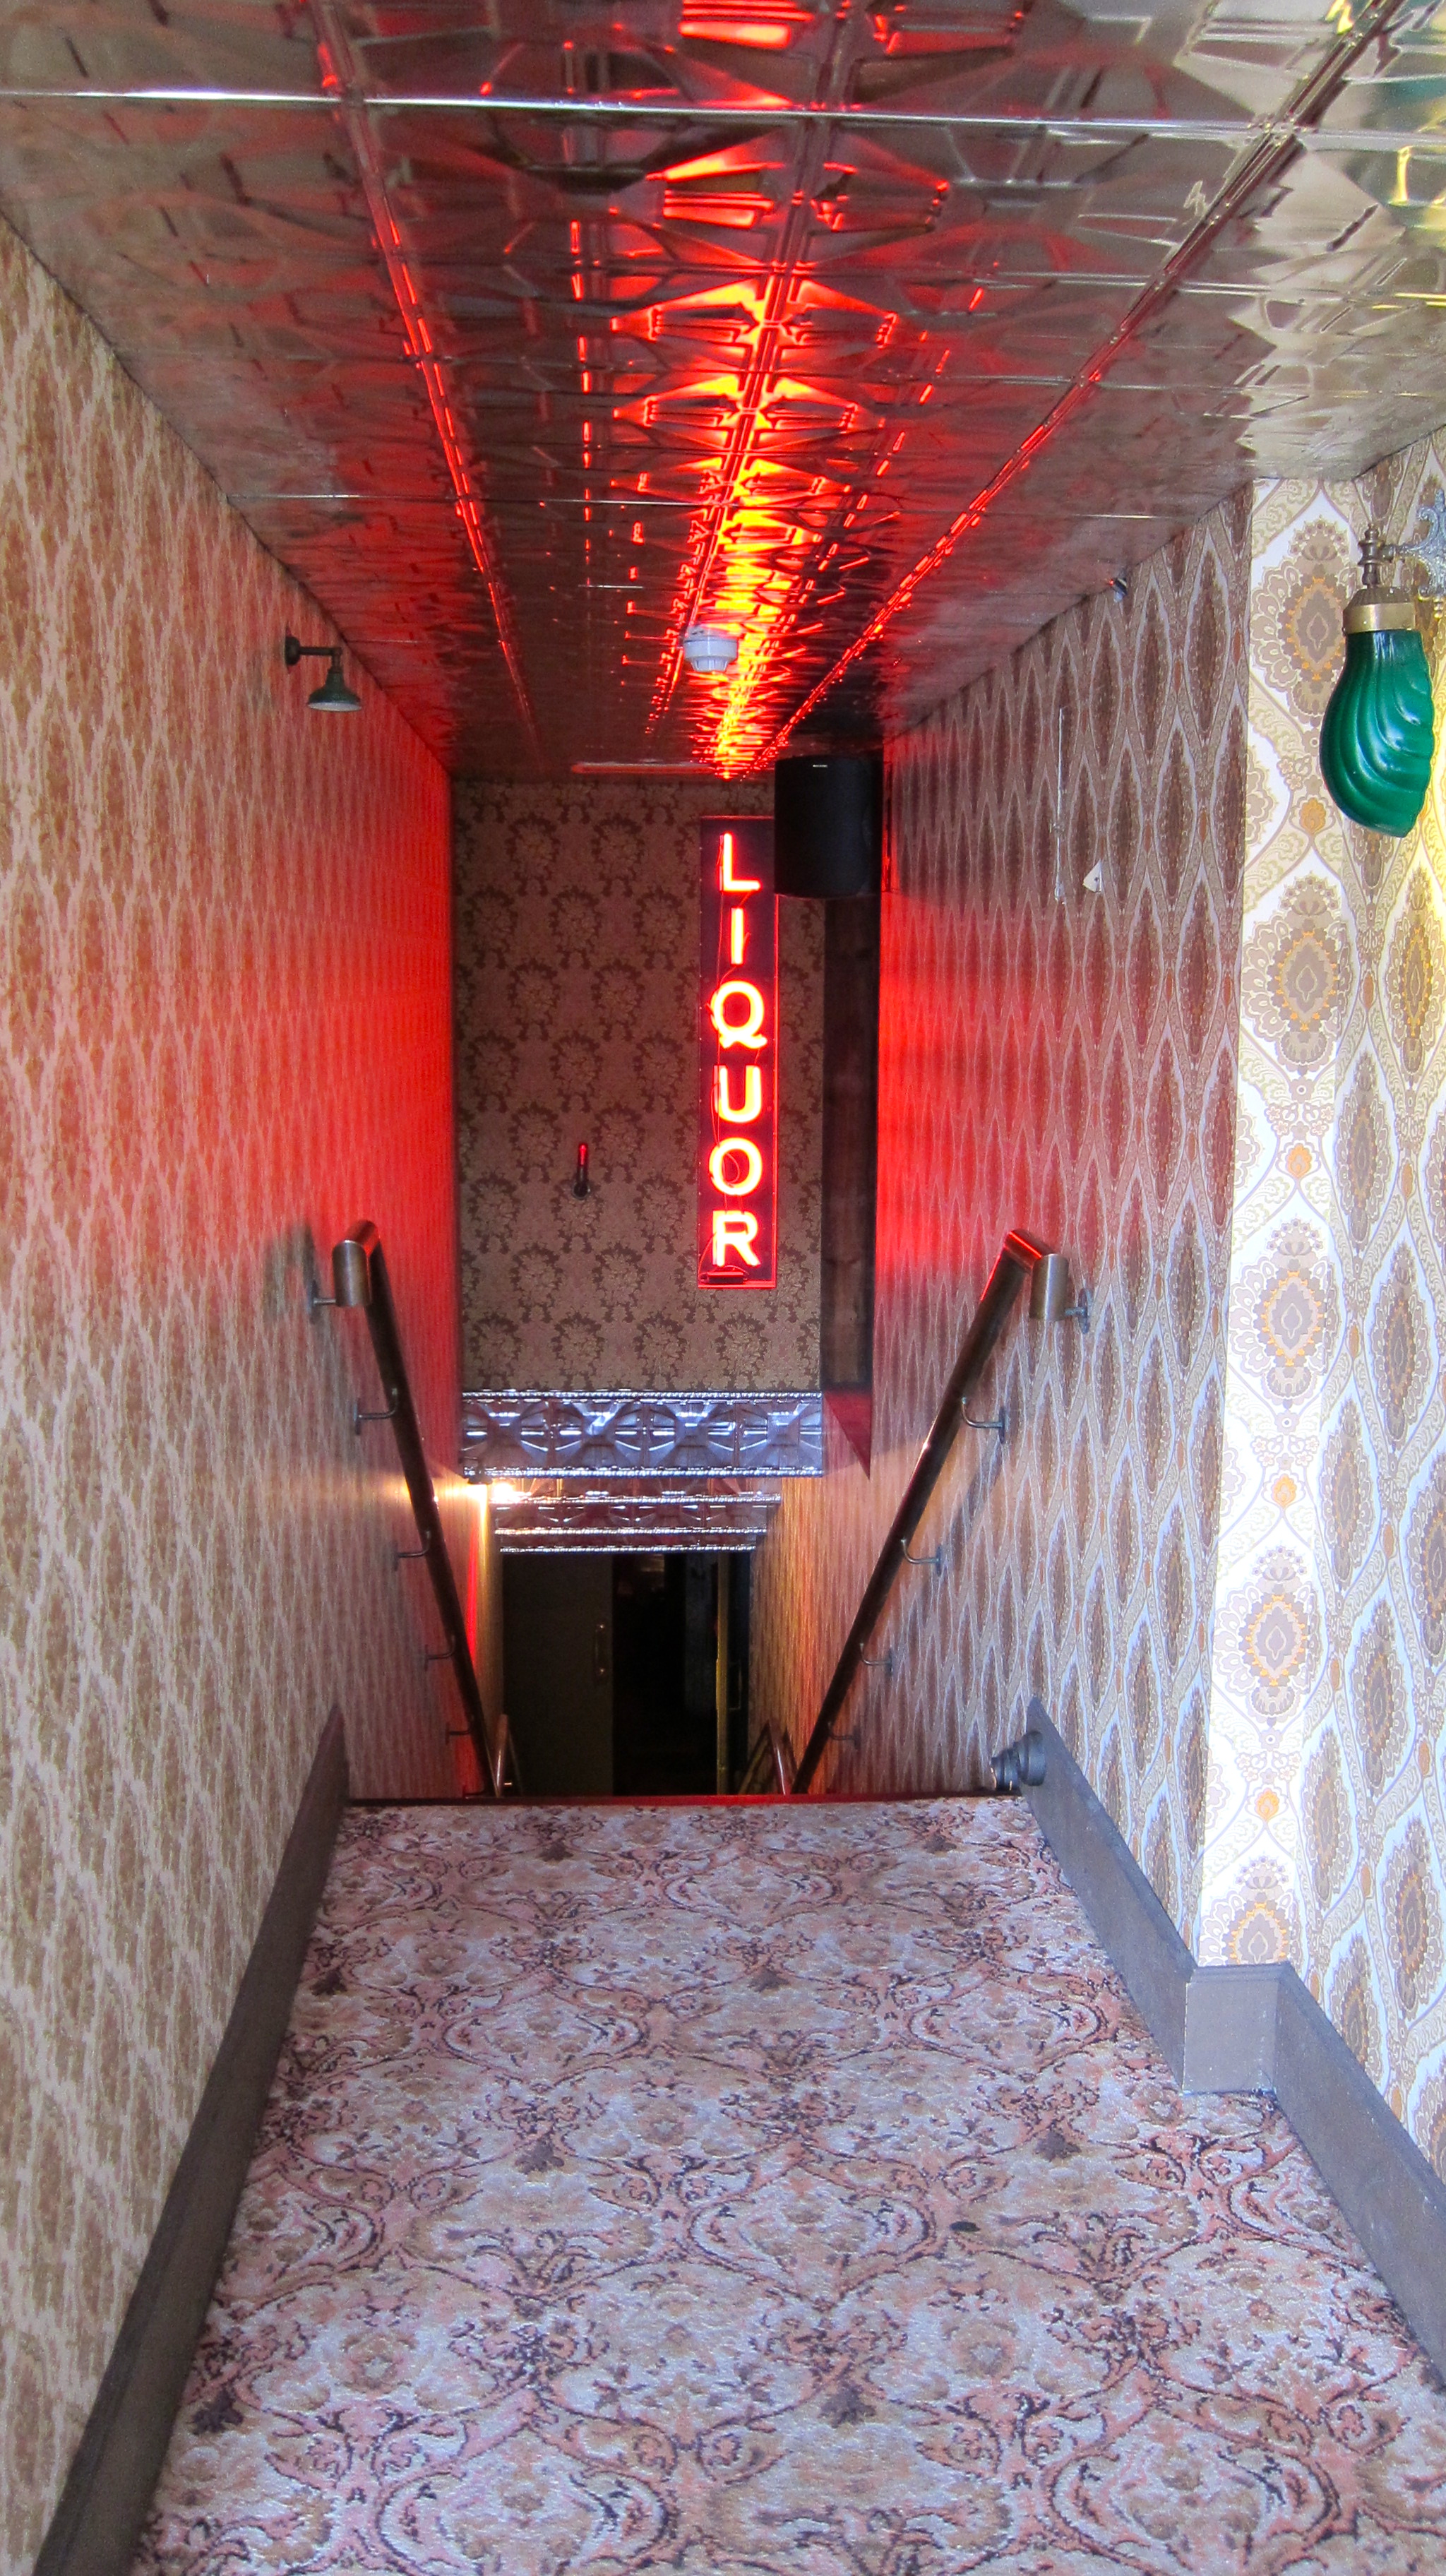 The Liquor Rooms